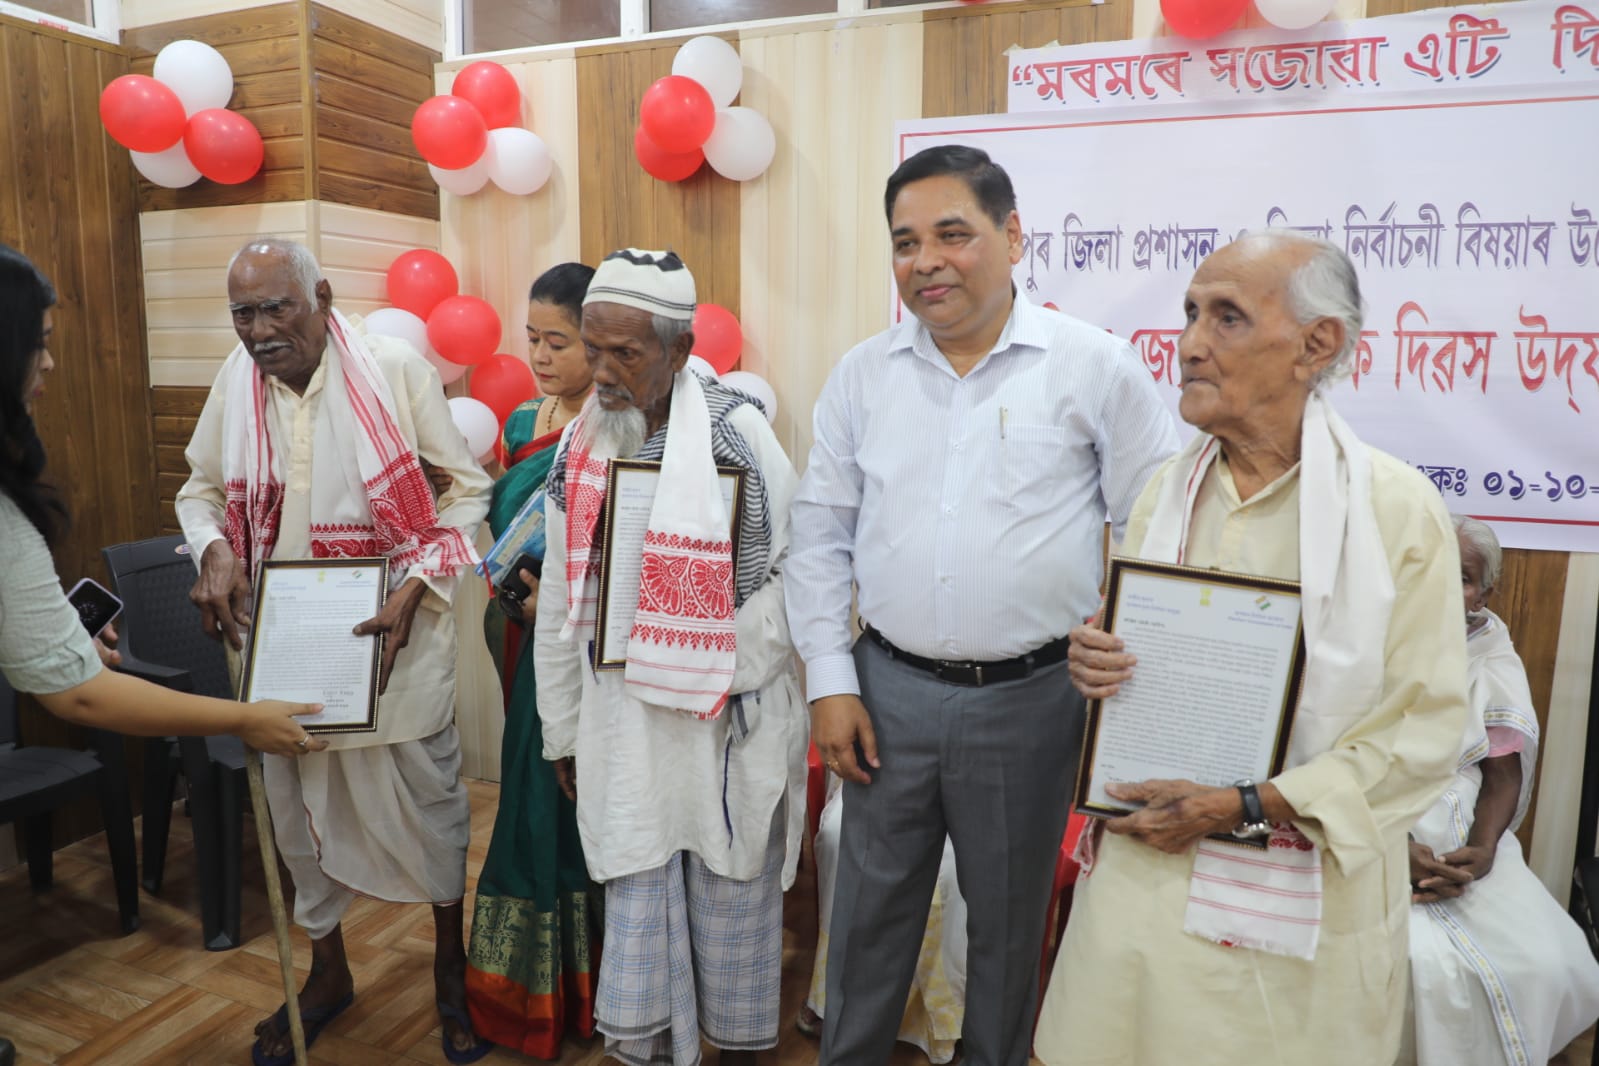 World senior citizen day 2022 celebrated in Tezpur